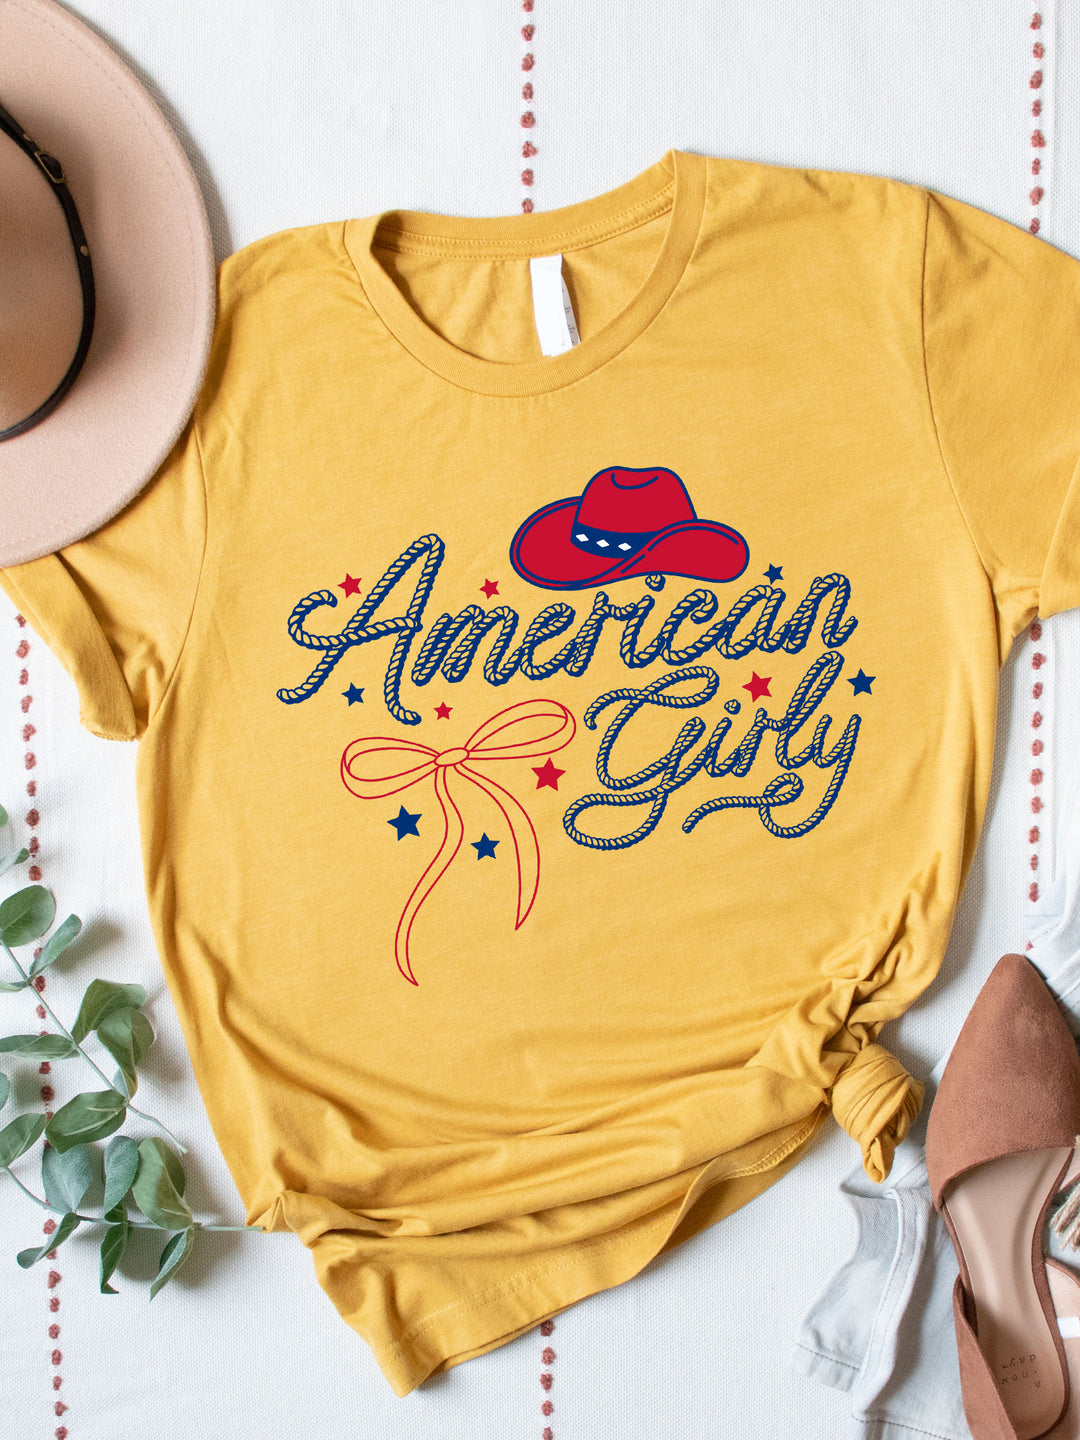 American Girly Graphic Tee